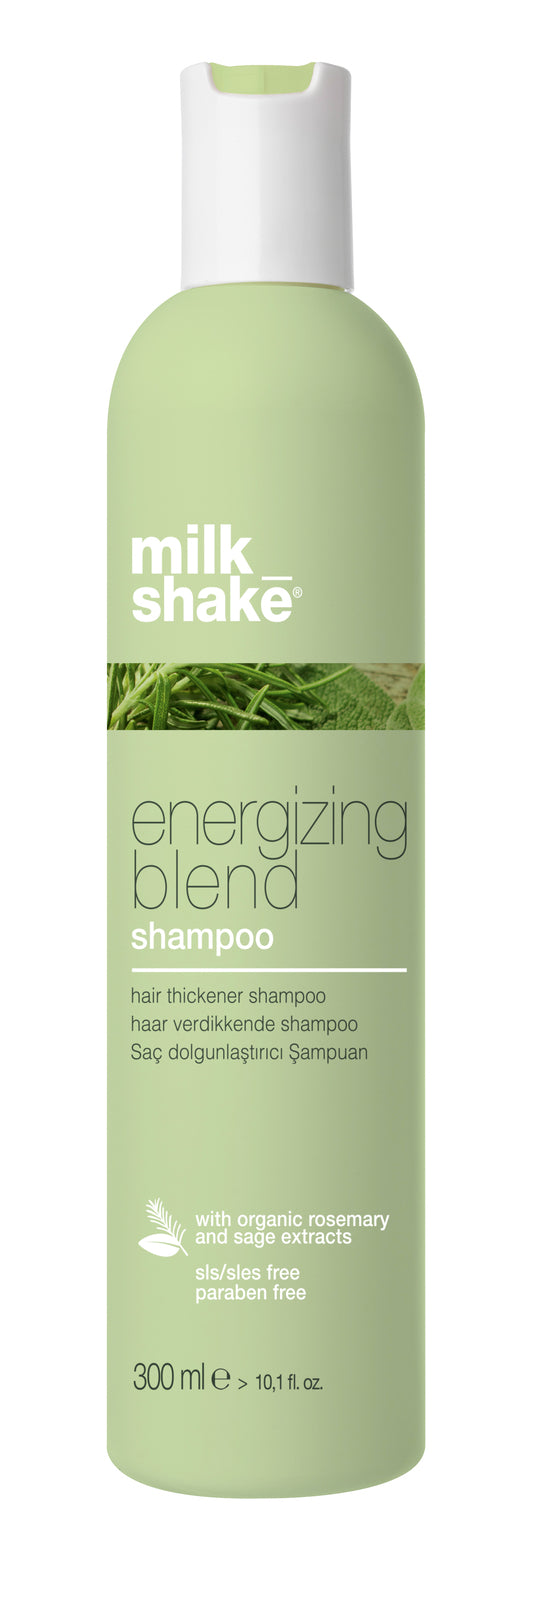 Milkshake energizing blend shampoo 300ML